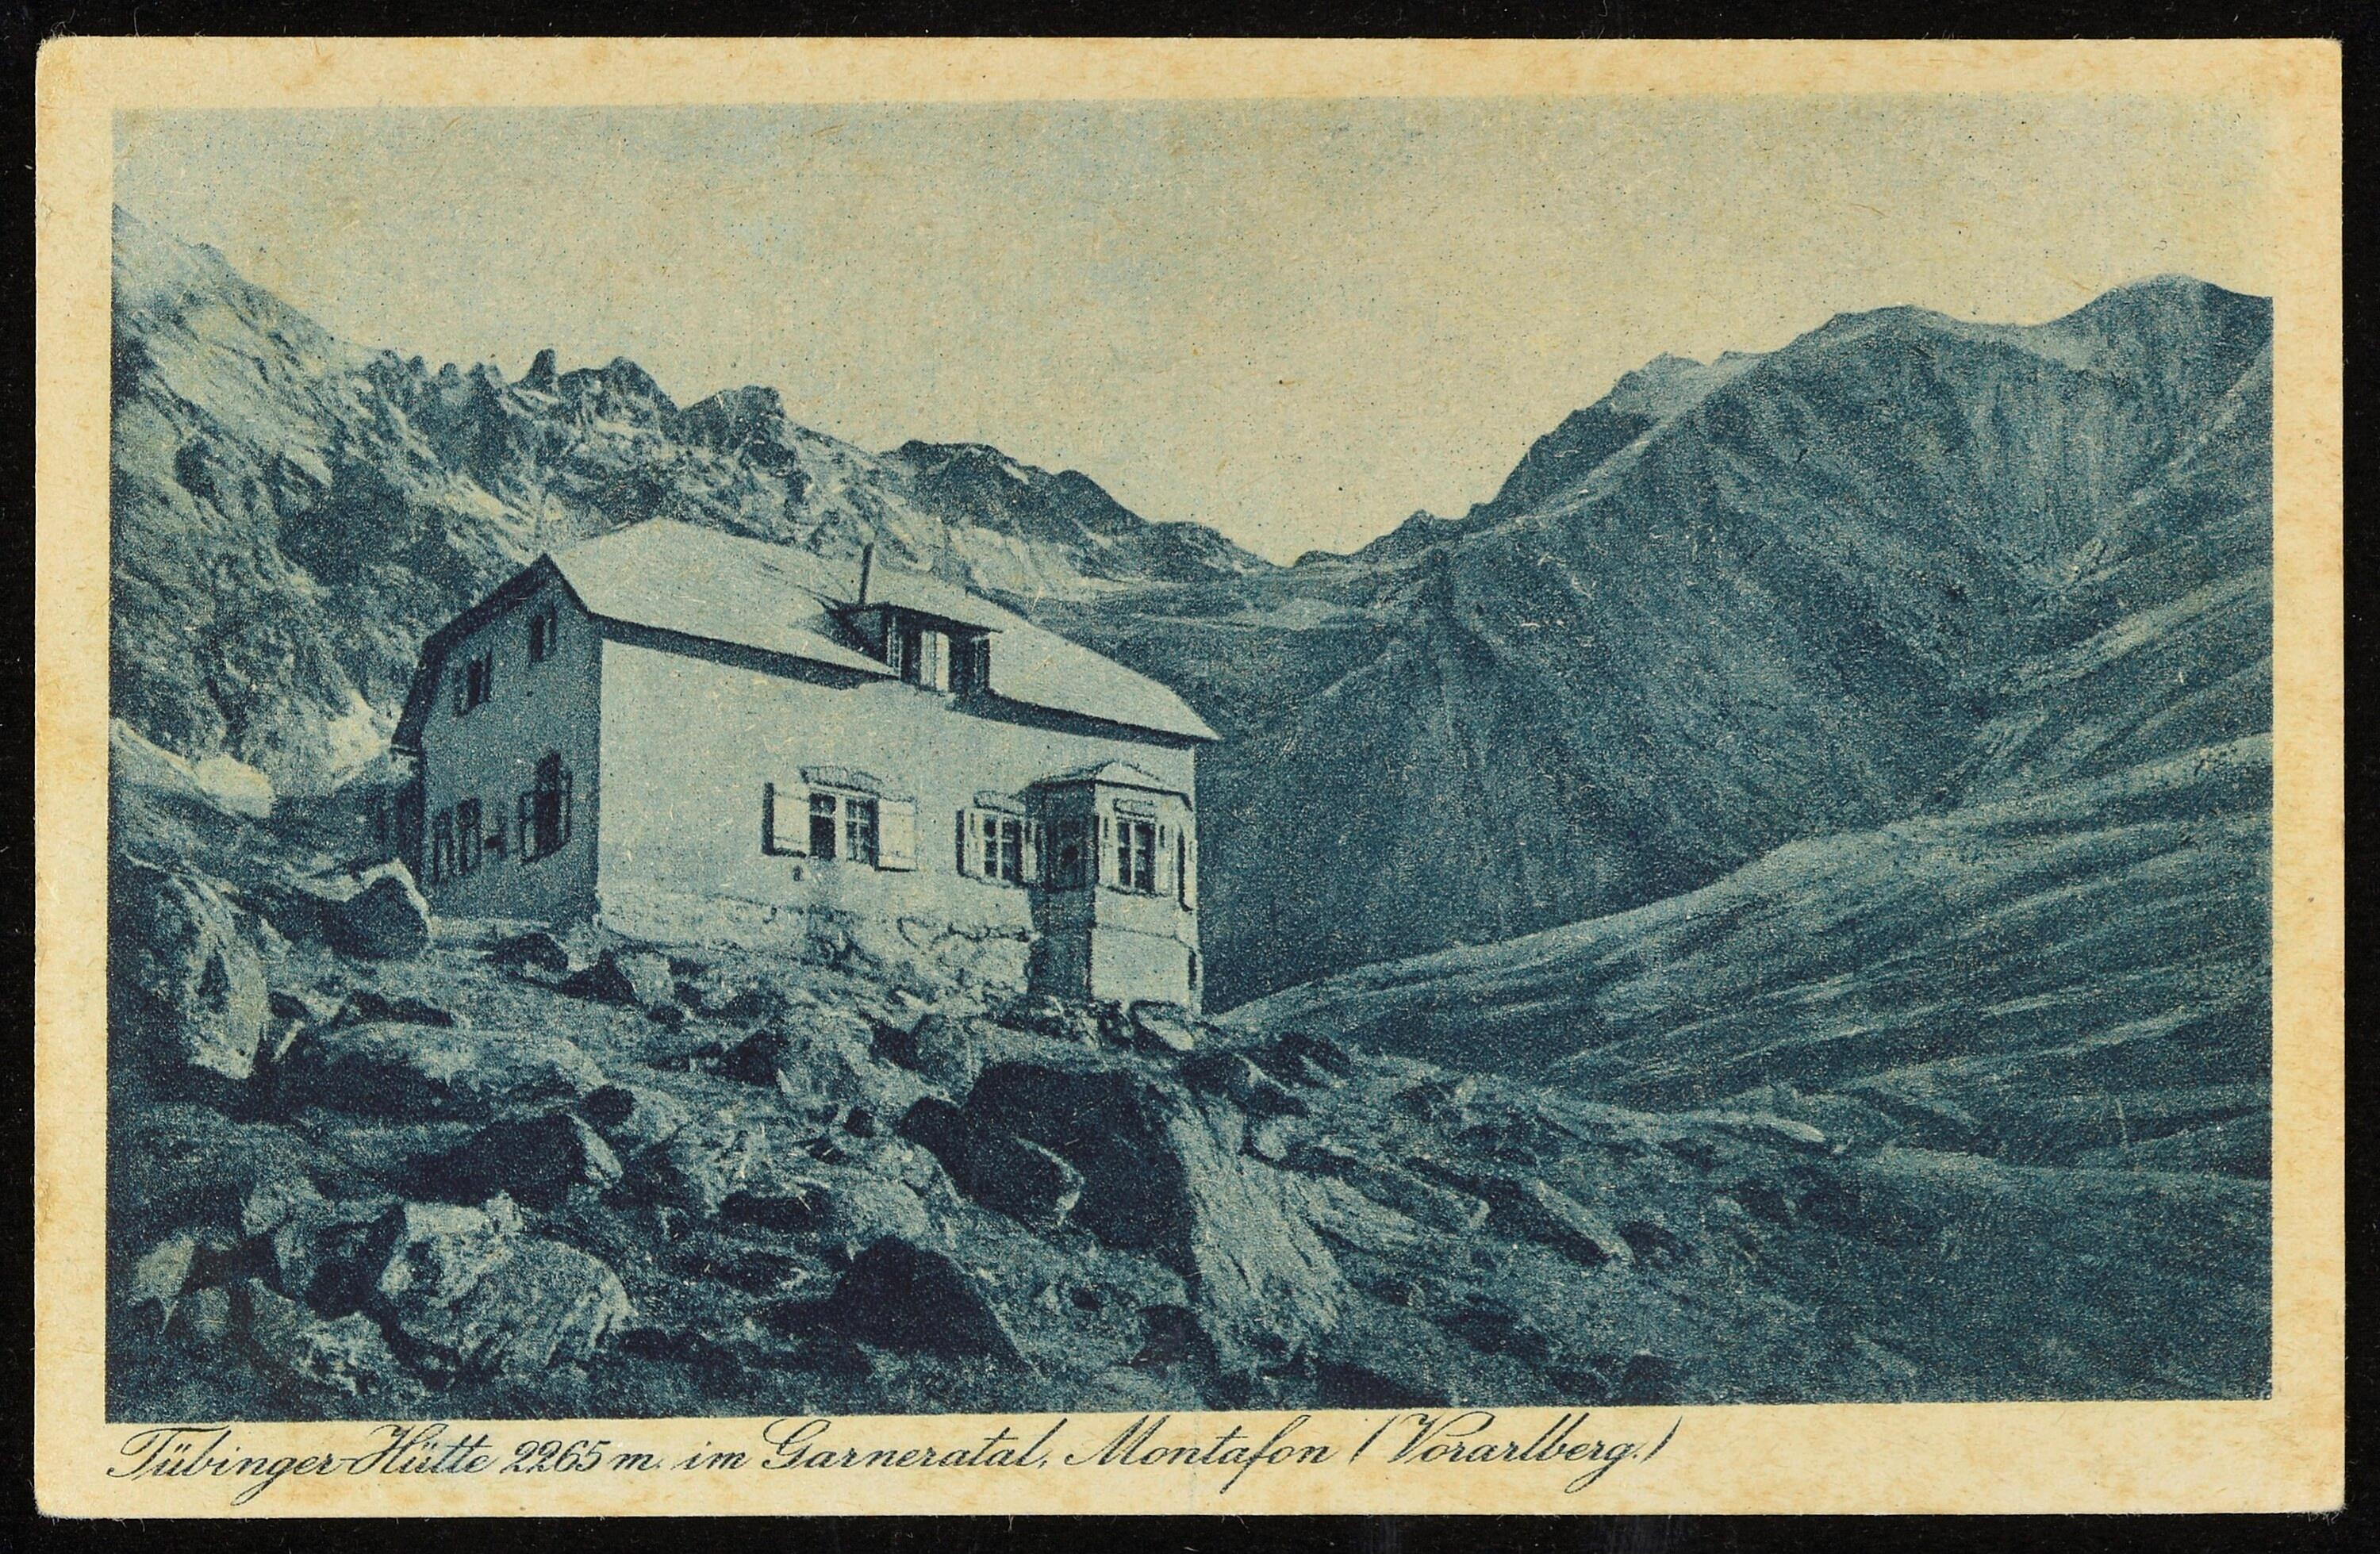 [Gaschurn] Tübinger Hütte 2265 m im Garneratal Montafon (Vorarlberg)></div>


    <hr>
    <div class=